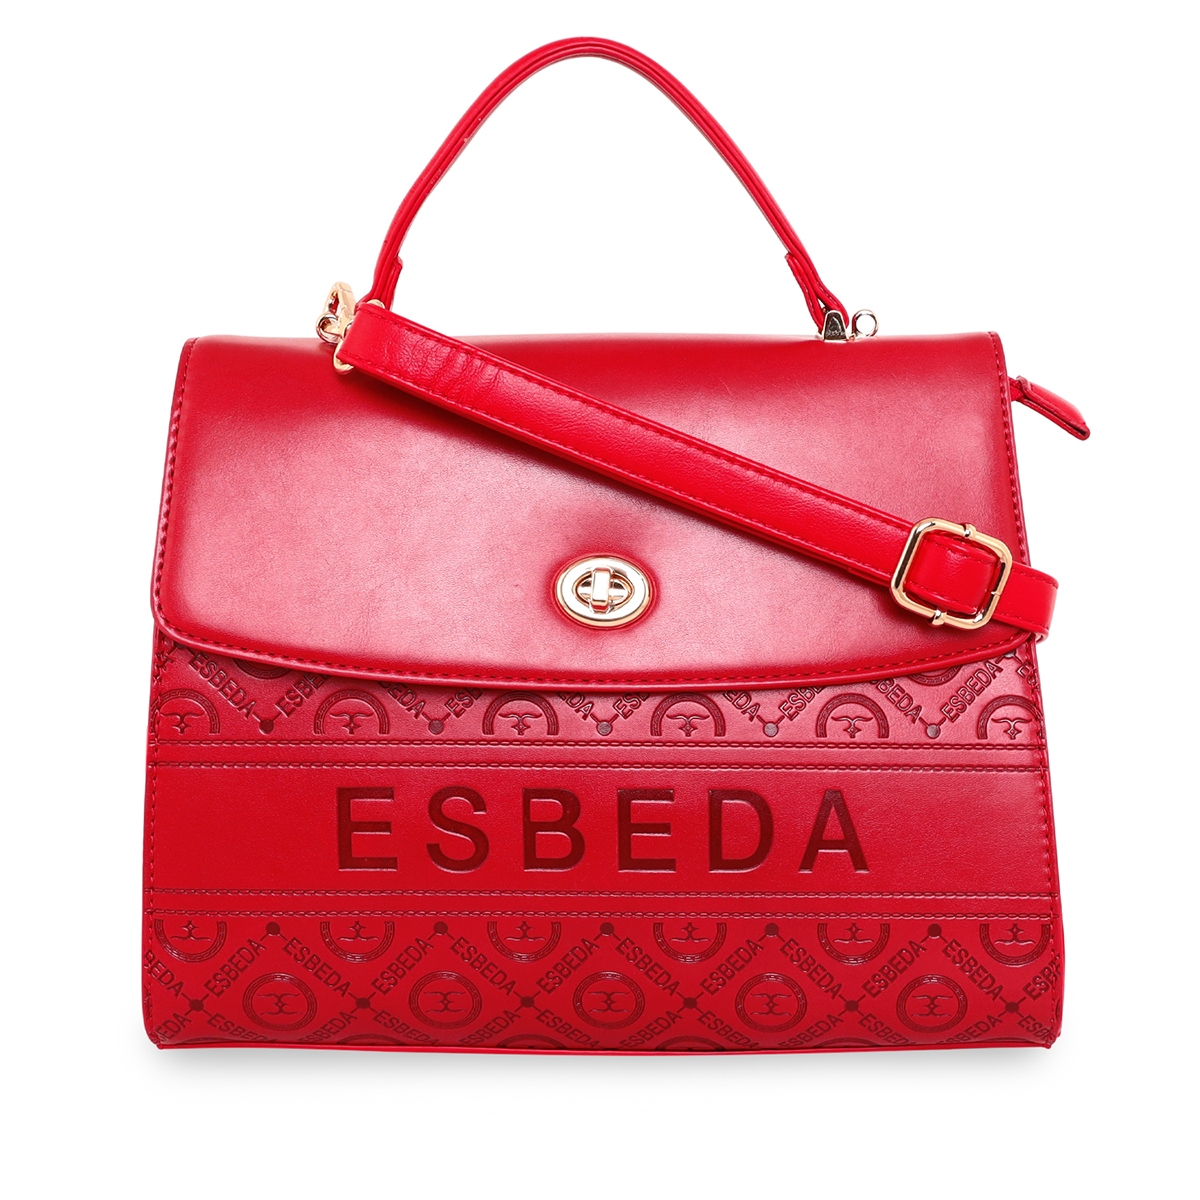 ESBEDA | ESBEDA Red Color ESBEDA Logo Embossed Handbag For Women